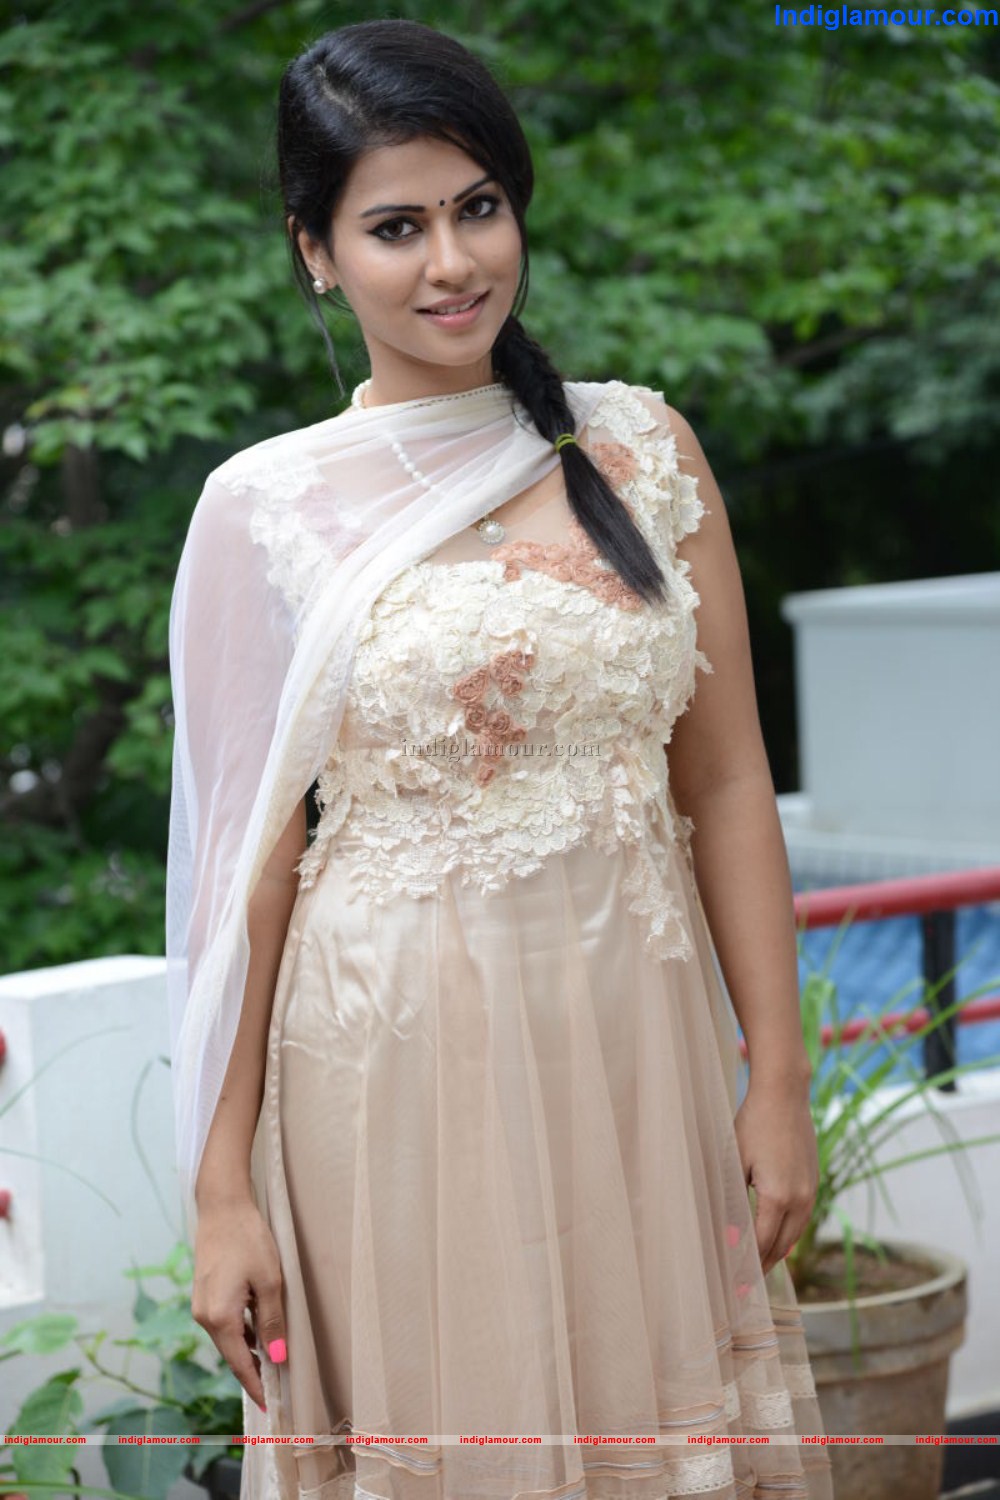 Sharmila Mandre Actress HD photos,images,pics and stills-indiglamour.com  #295889